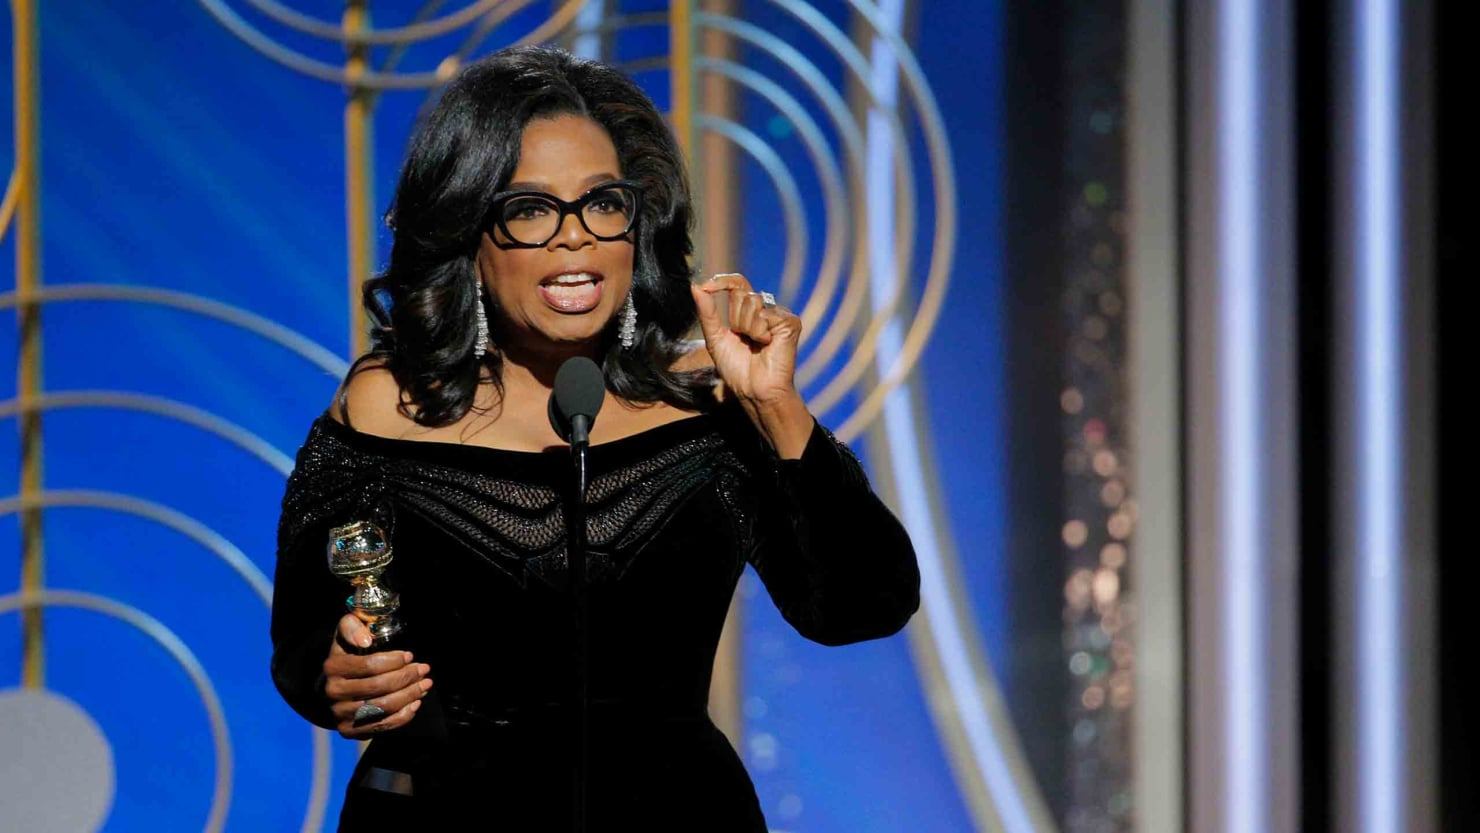 Oprah Winfrey reiterates she will not run for president